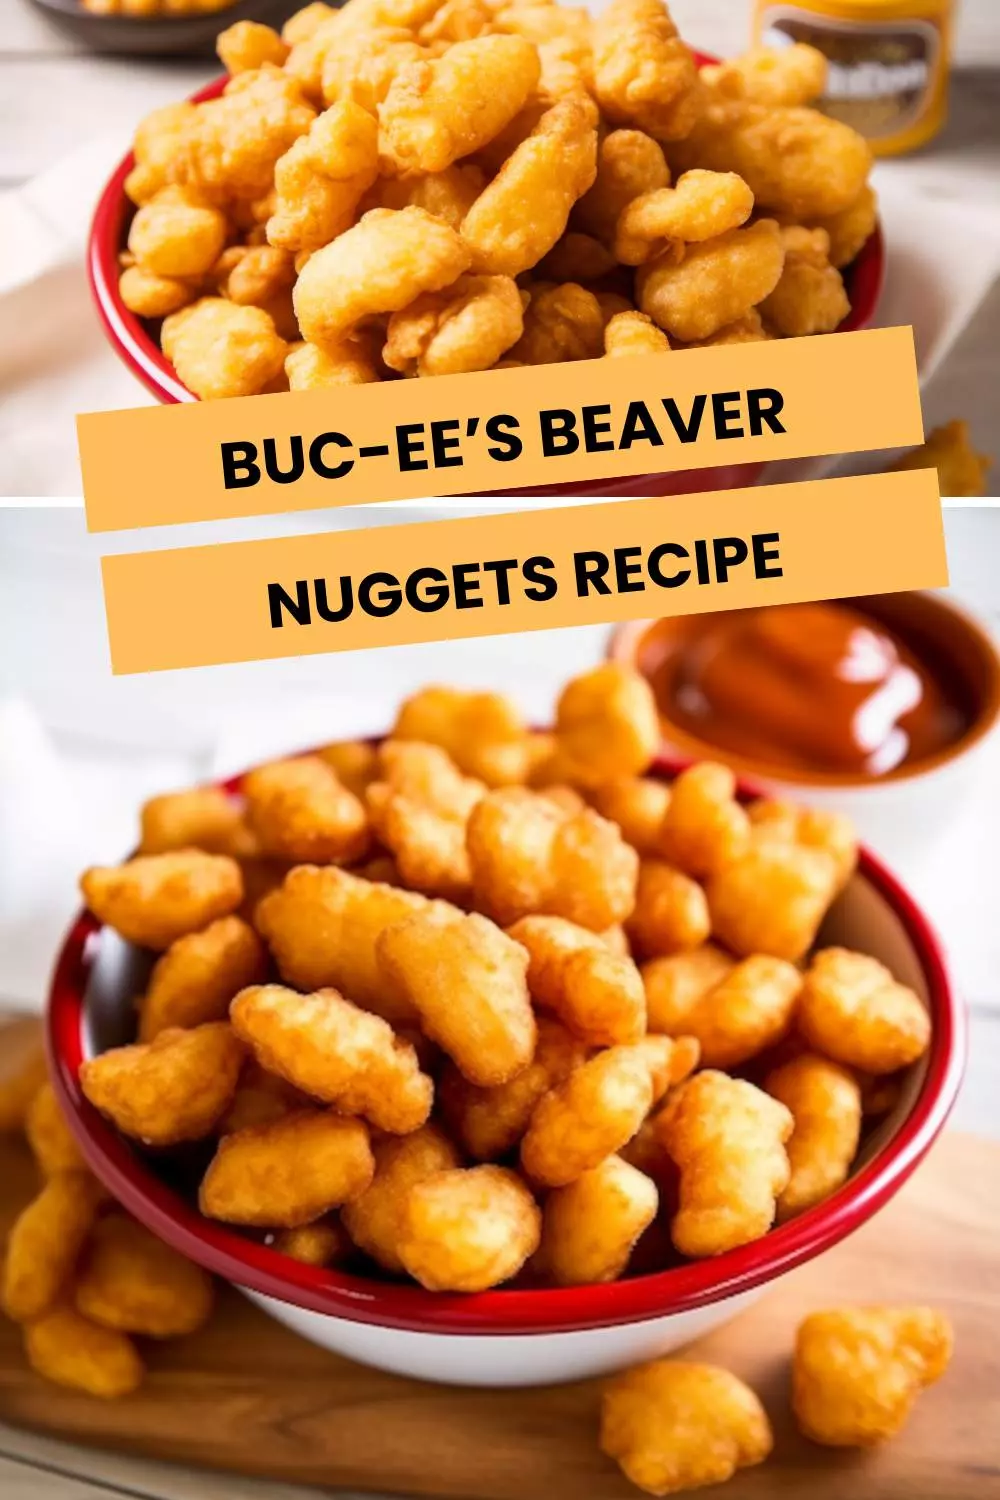 buc-ee’s beaver nuggets recipe